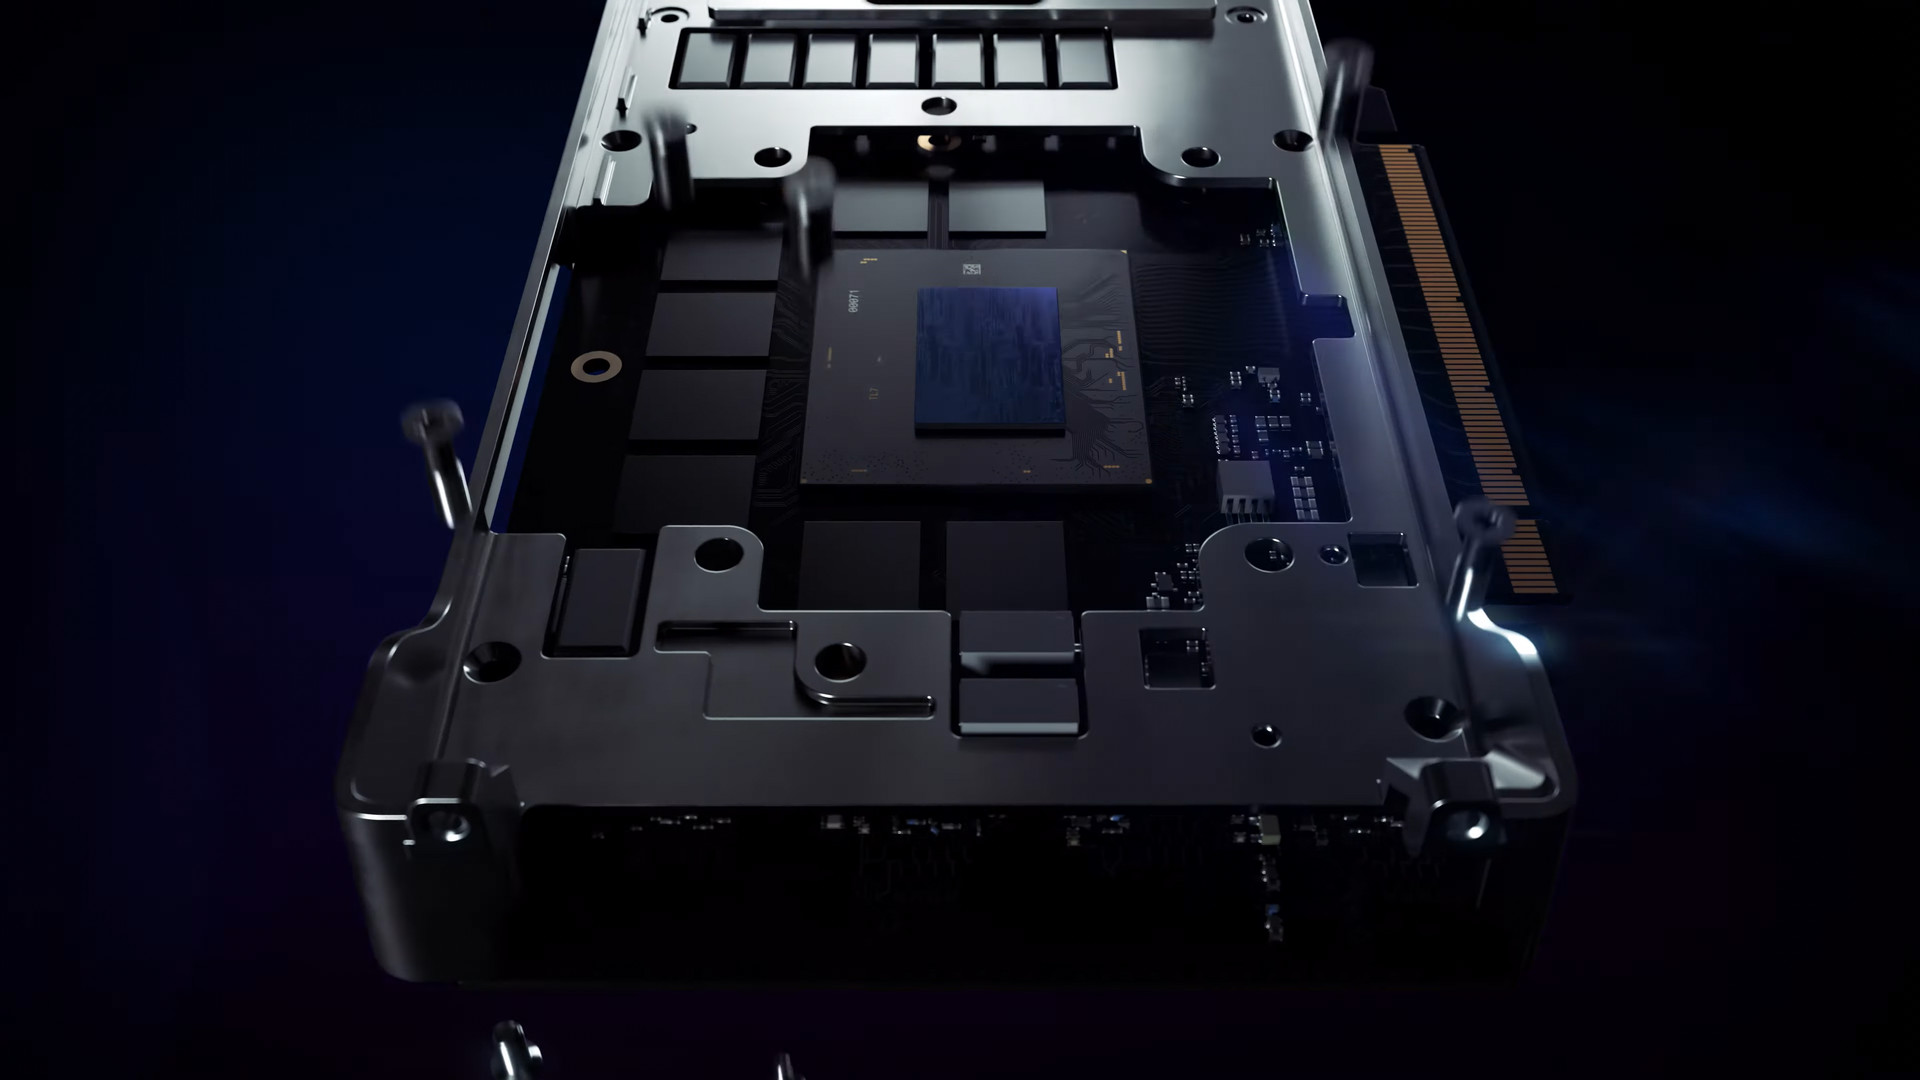 Intel ARC 桌上型顯卡